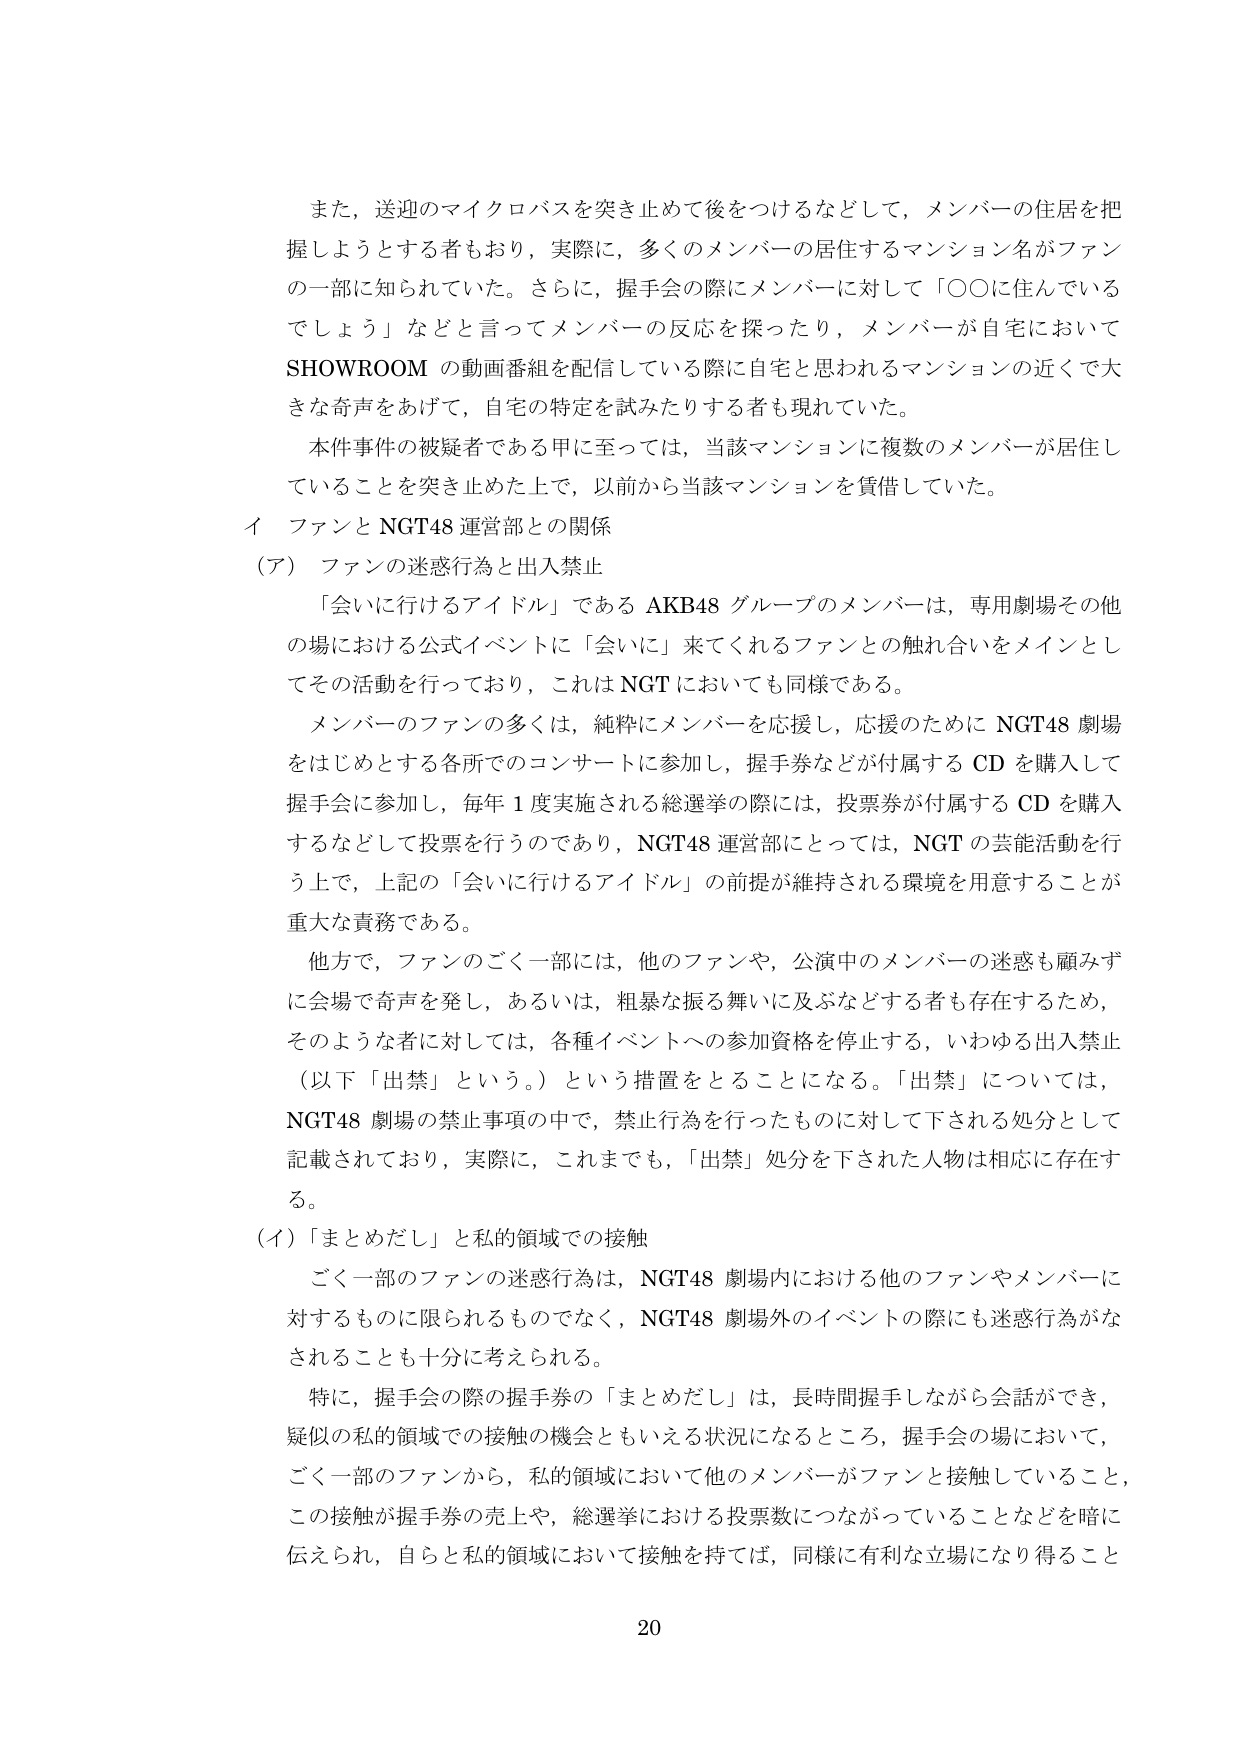 NGT48第三者委員会調査報告書22